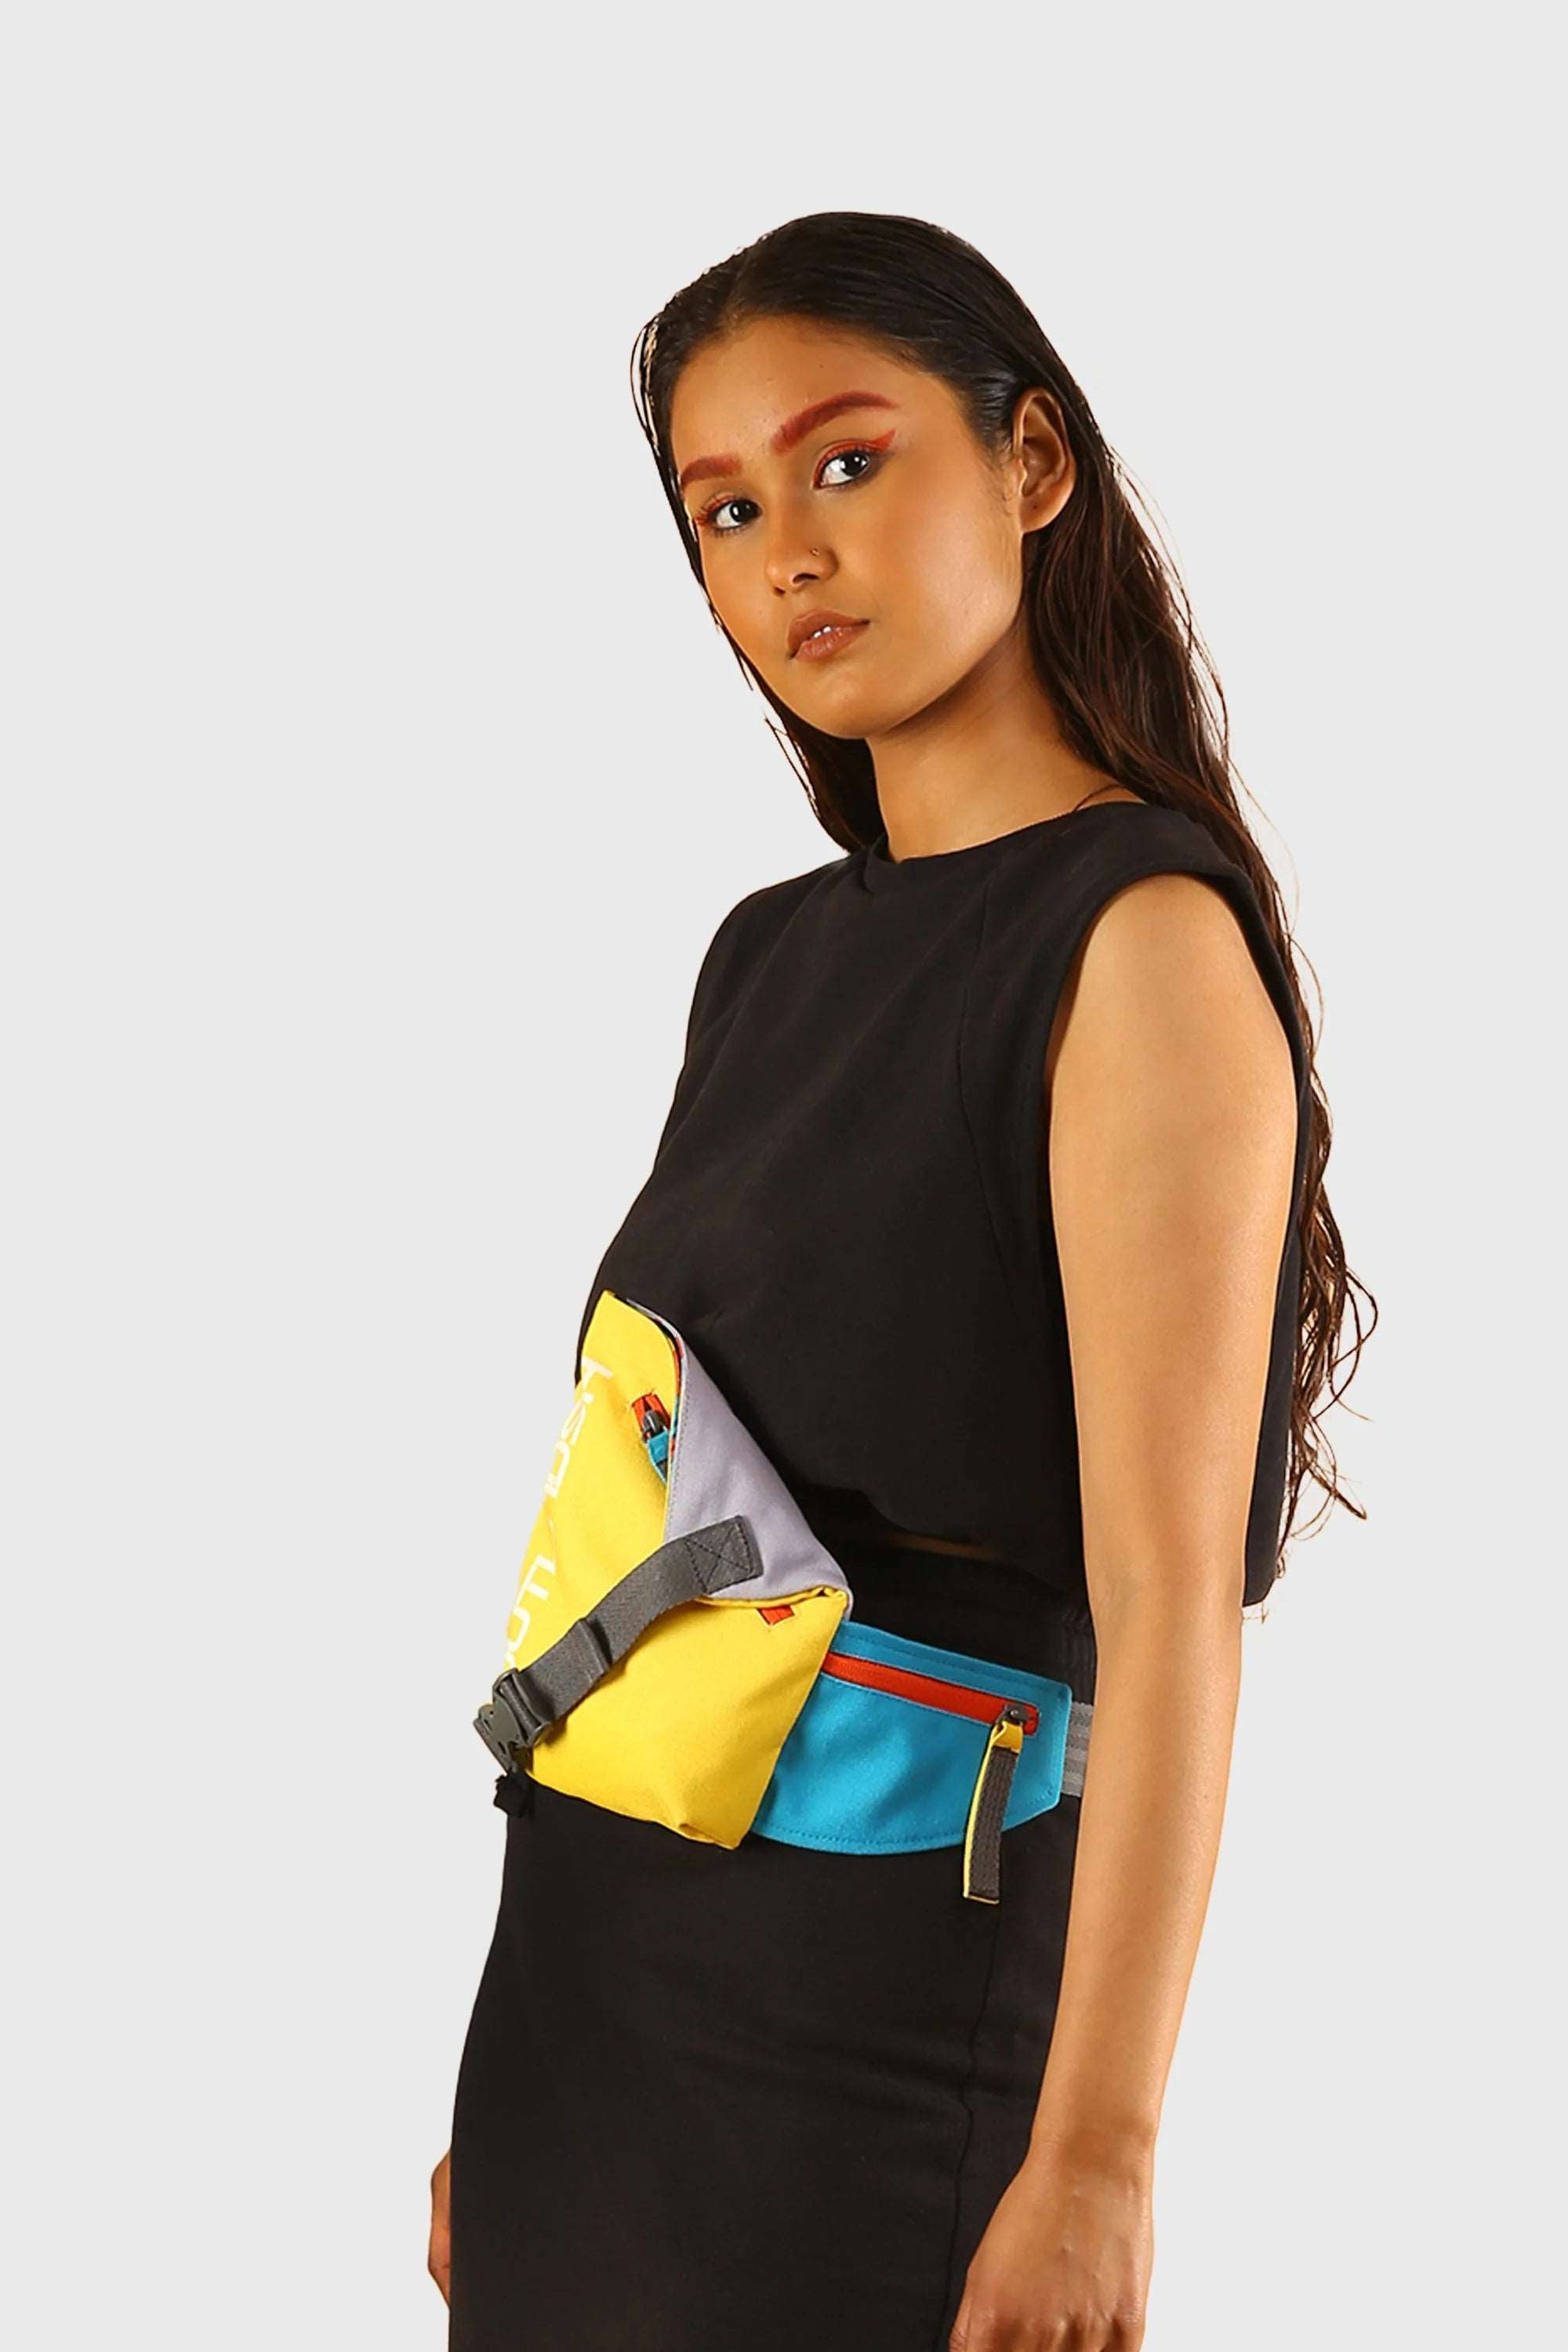 OUTLNDSH Fanny pack plus crossbody yellow color envelope style- waist bag, belt bag, sling bag, bum bag.